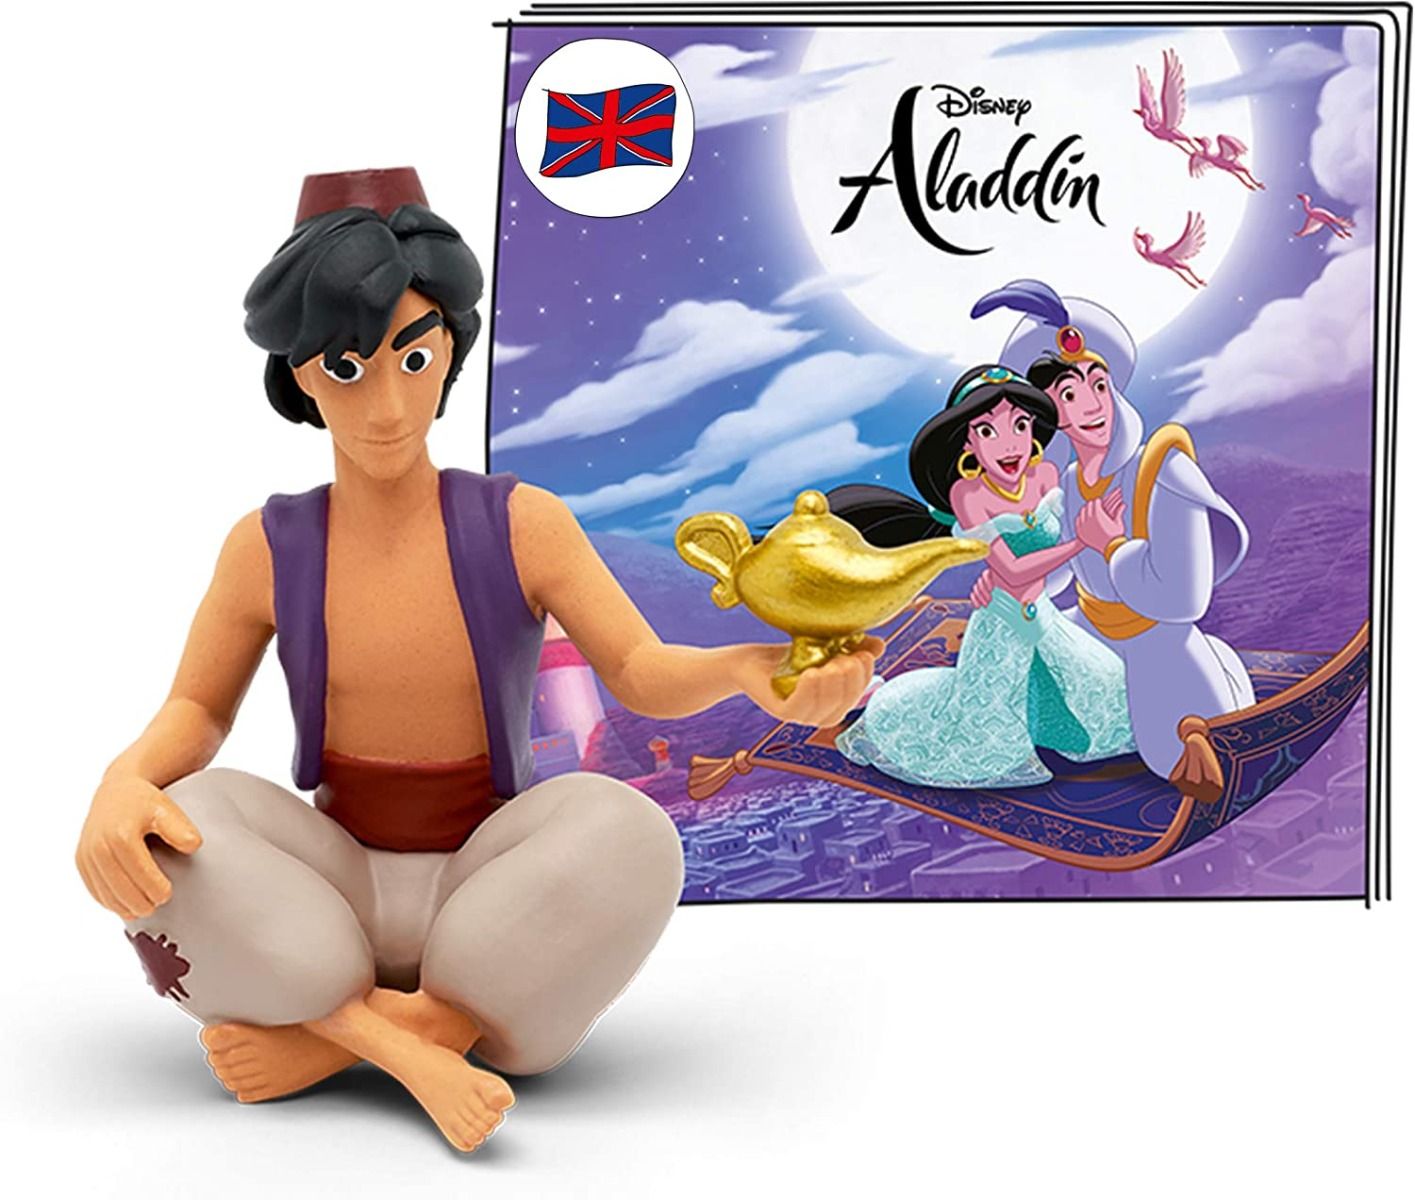 Disney - Aladdin [UK]